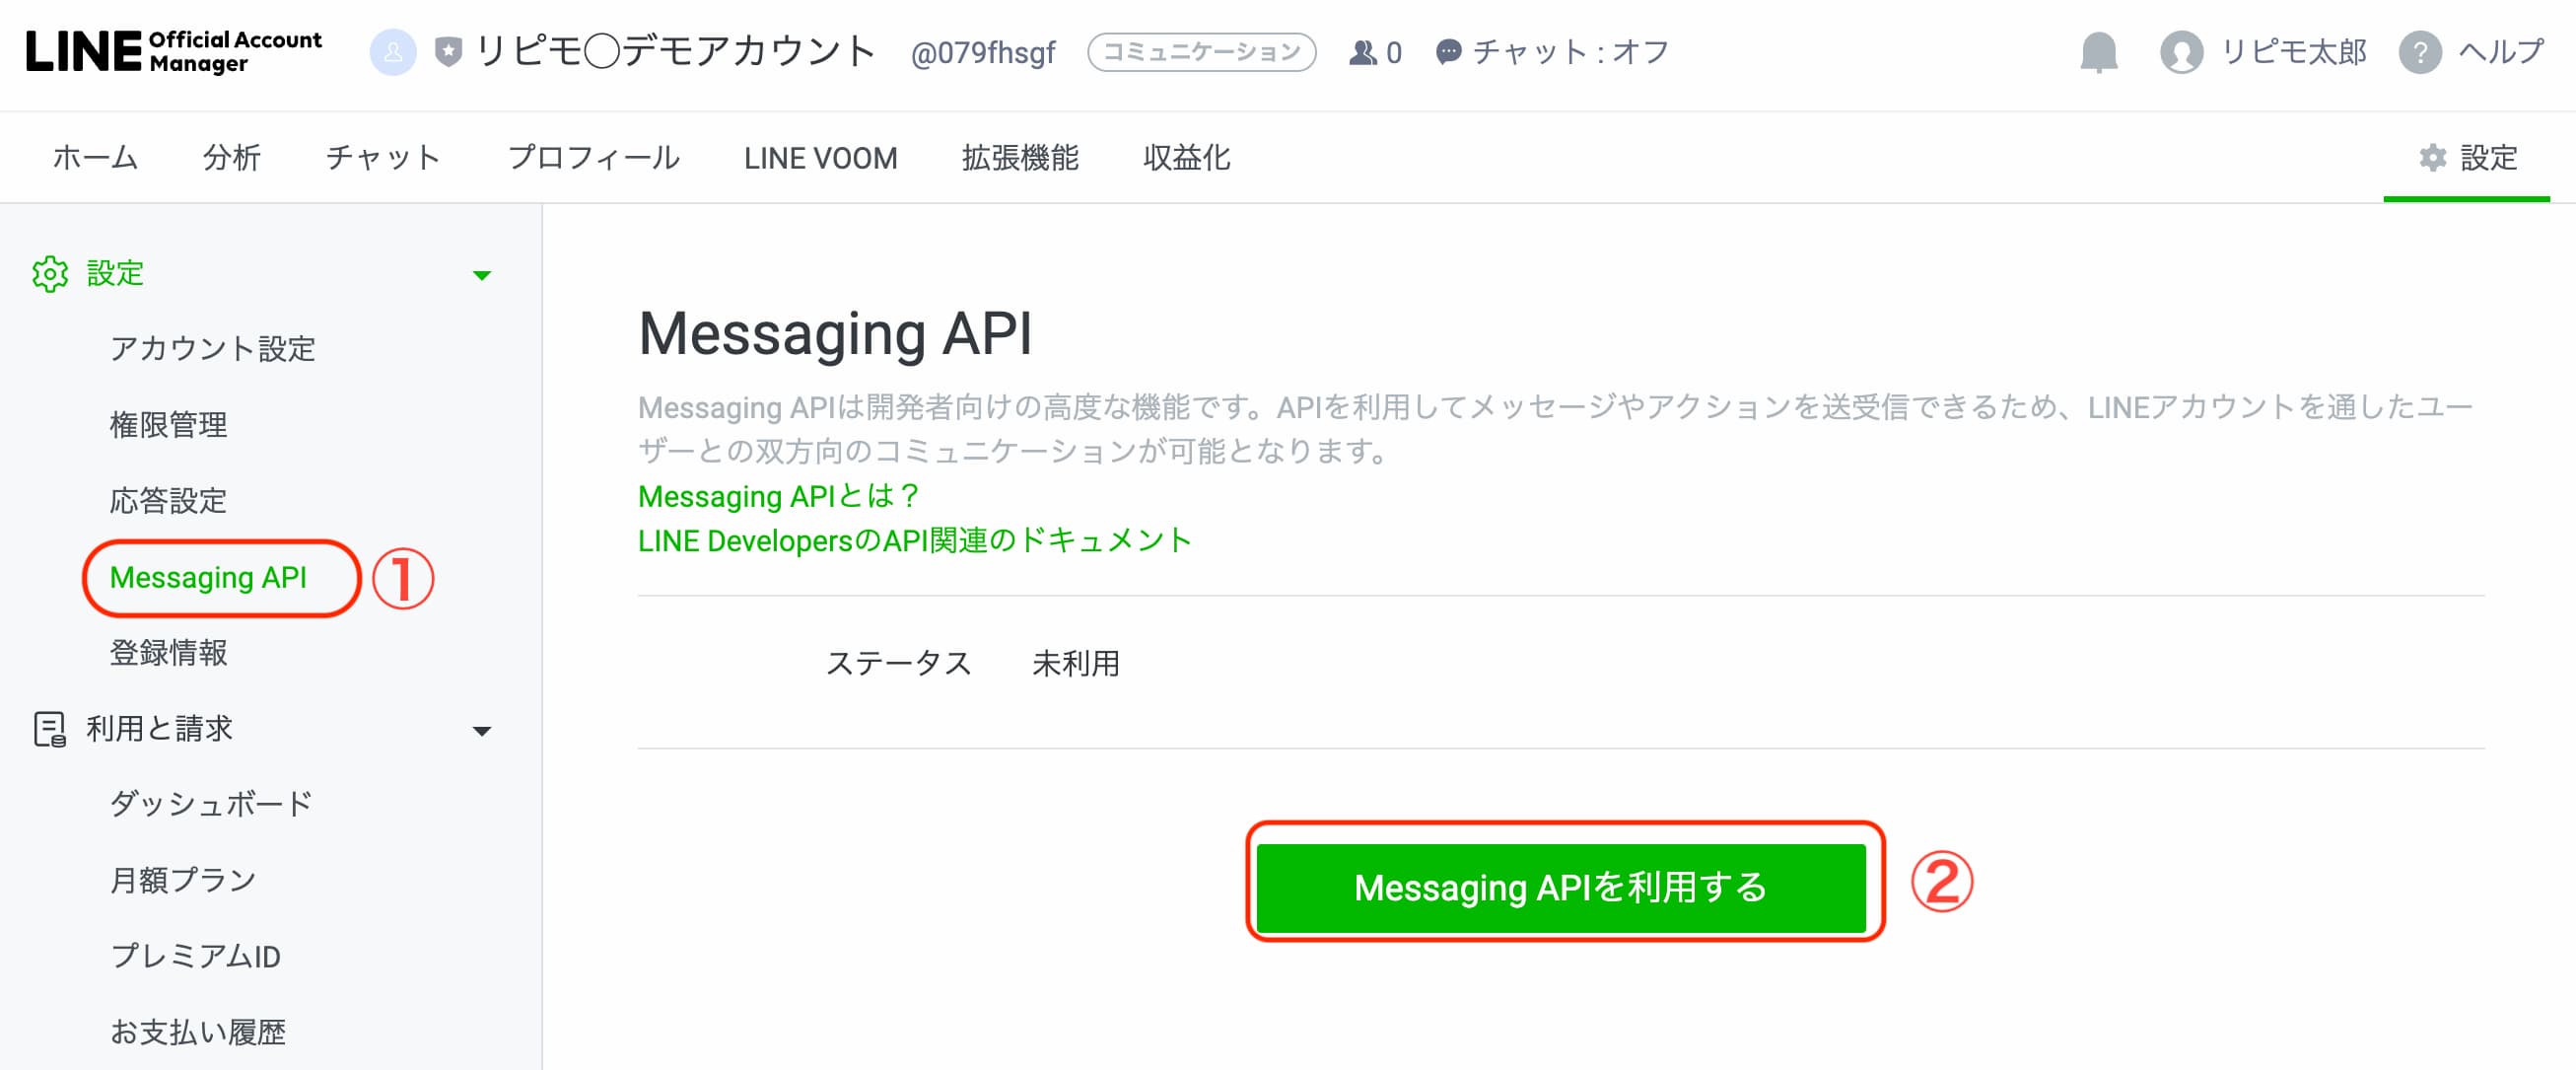 LINE Official Acount Managerの設定画面。左側メニューの「Messaging API」メニューと「Messaging APIを利用する」ボタンを囲っています。